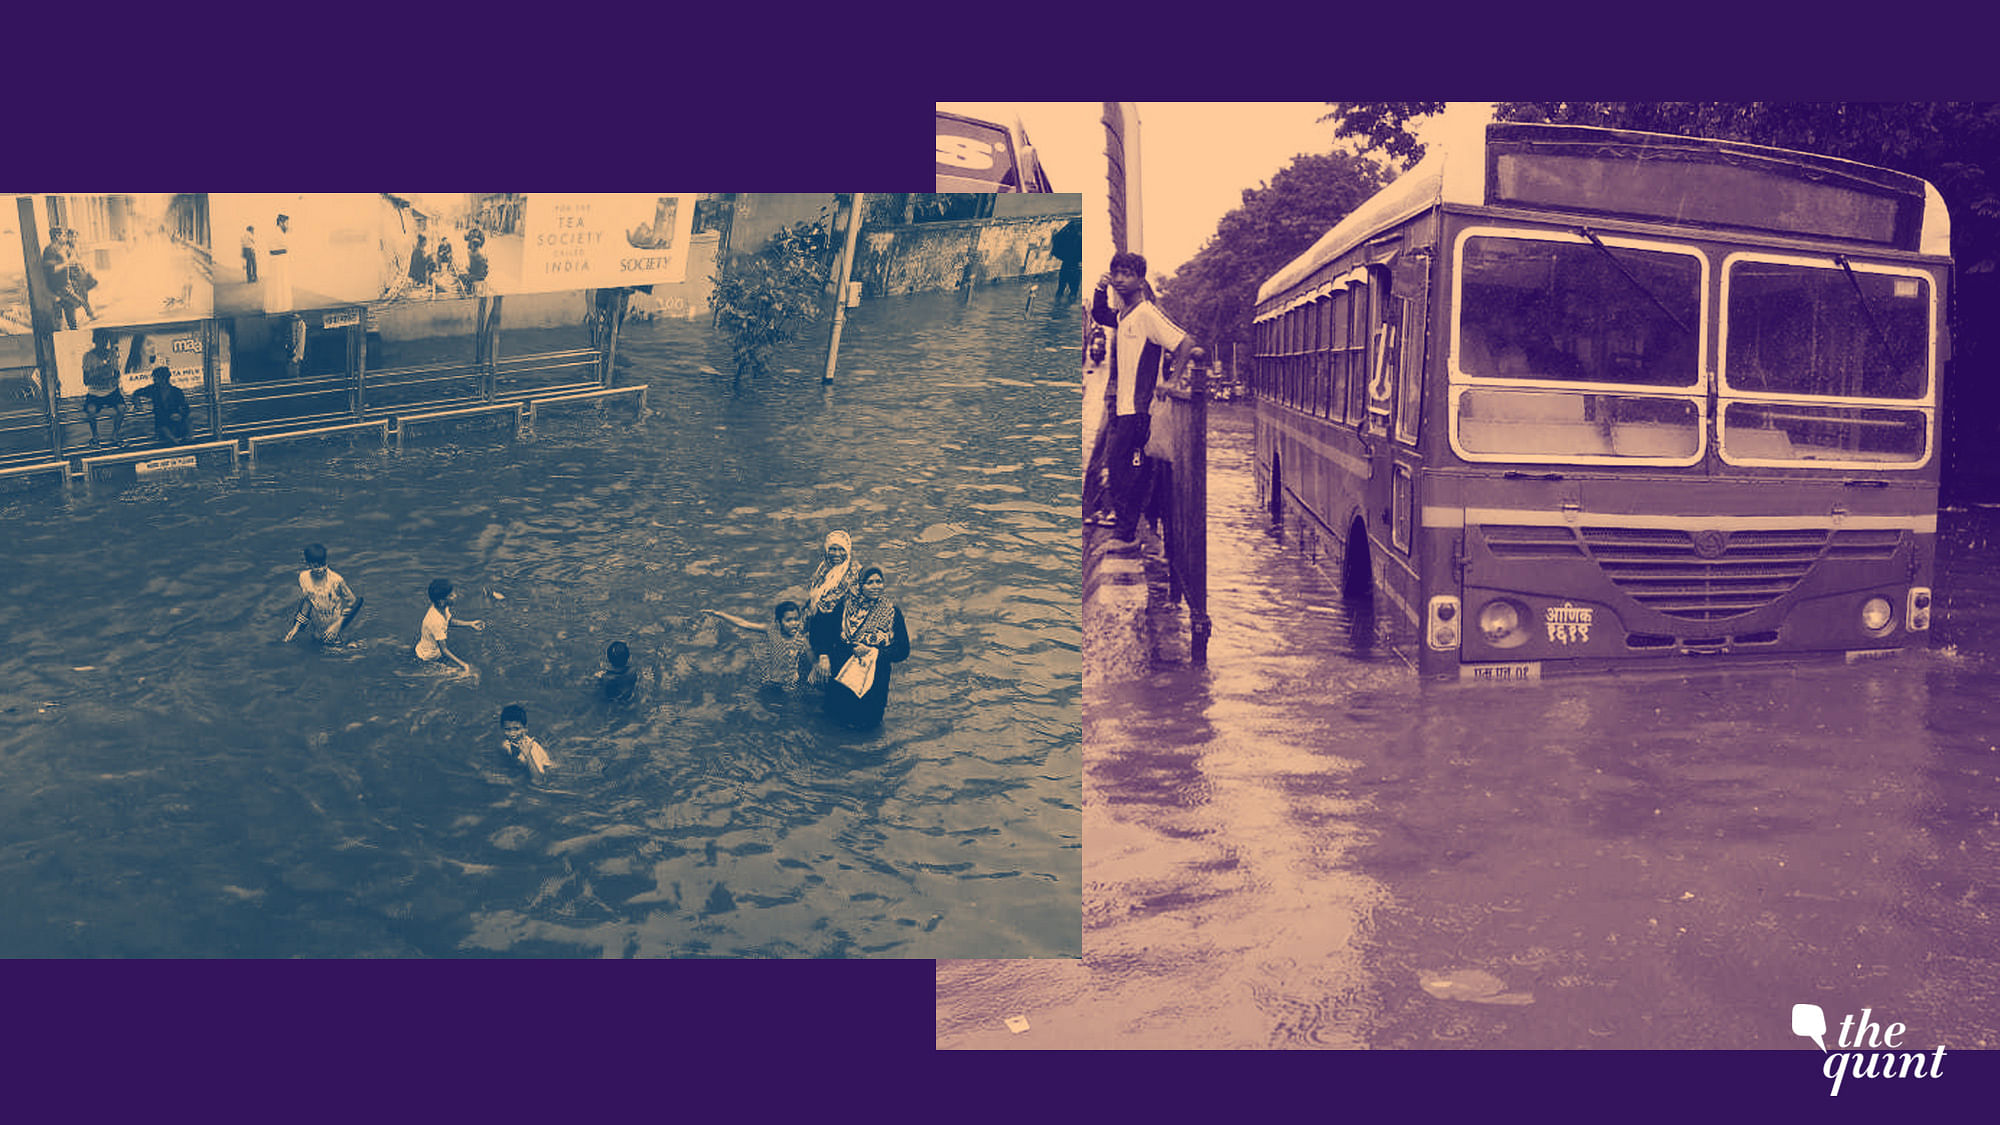 Each year, floods cause massive damage to Mumbai.